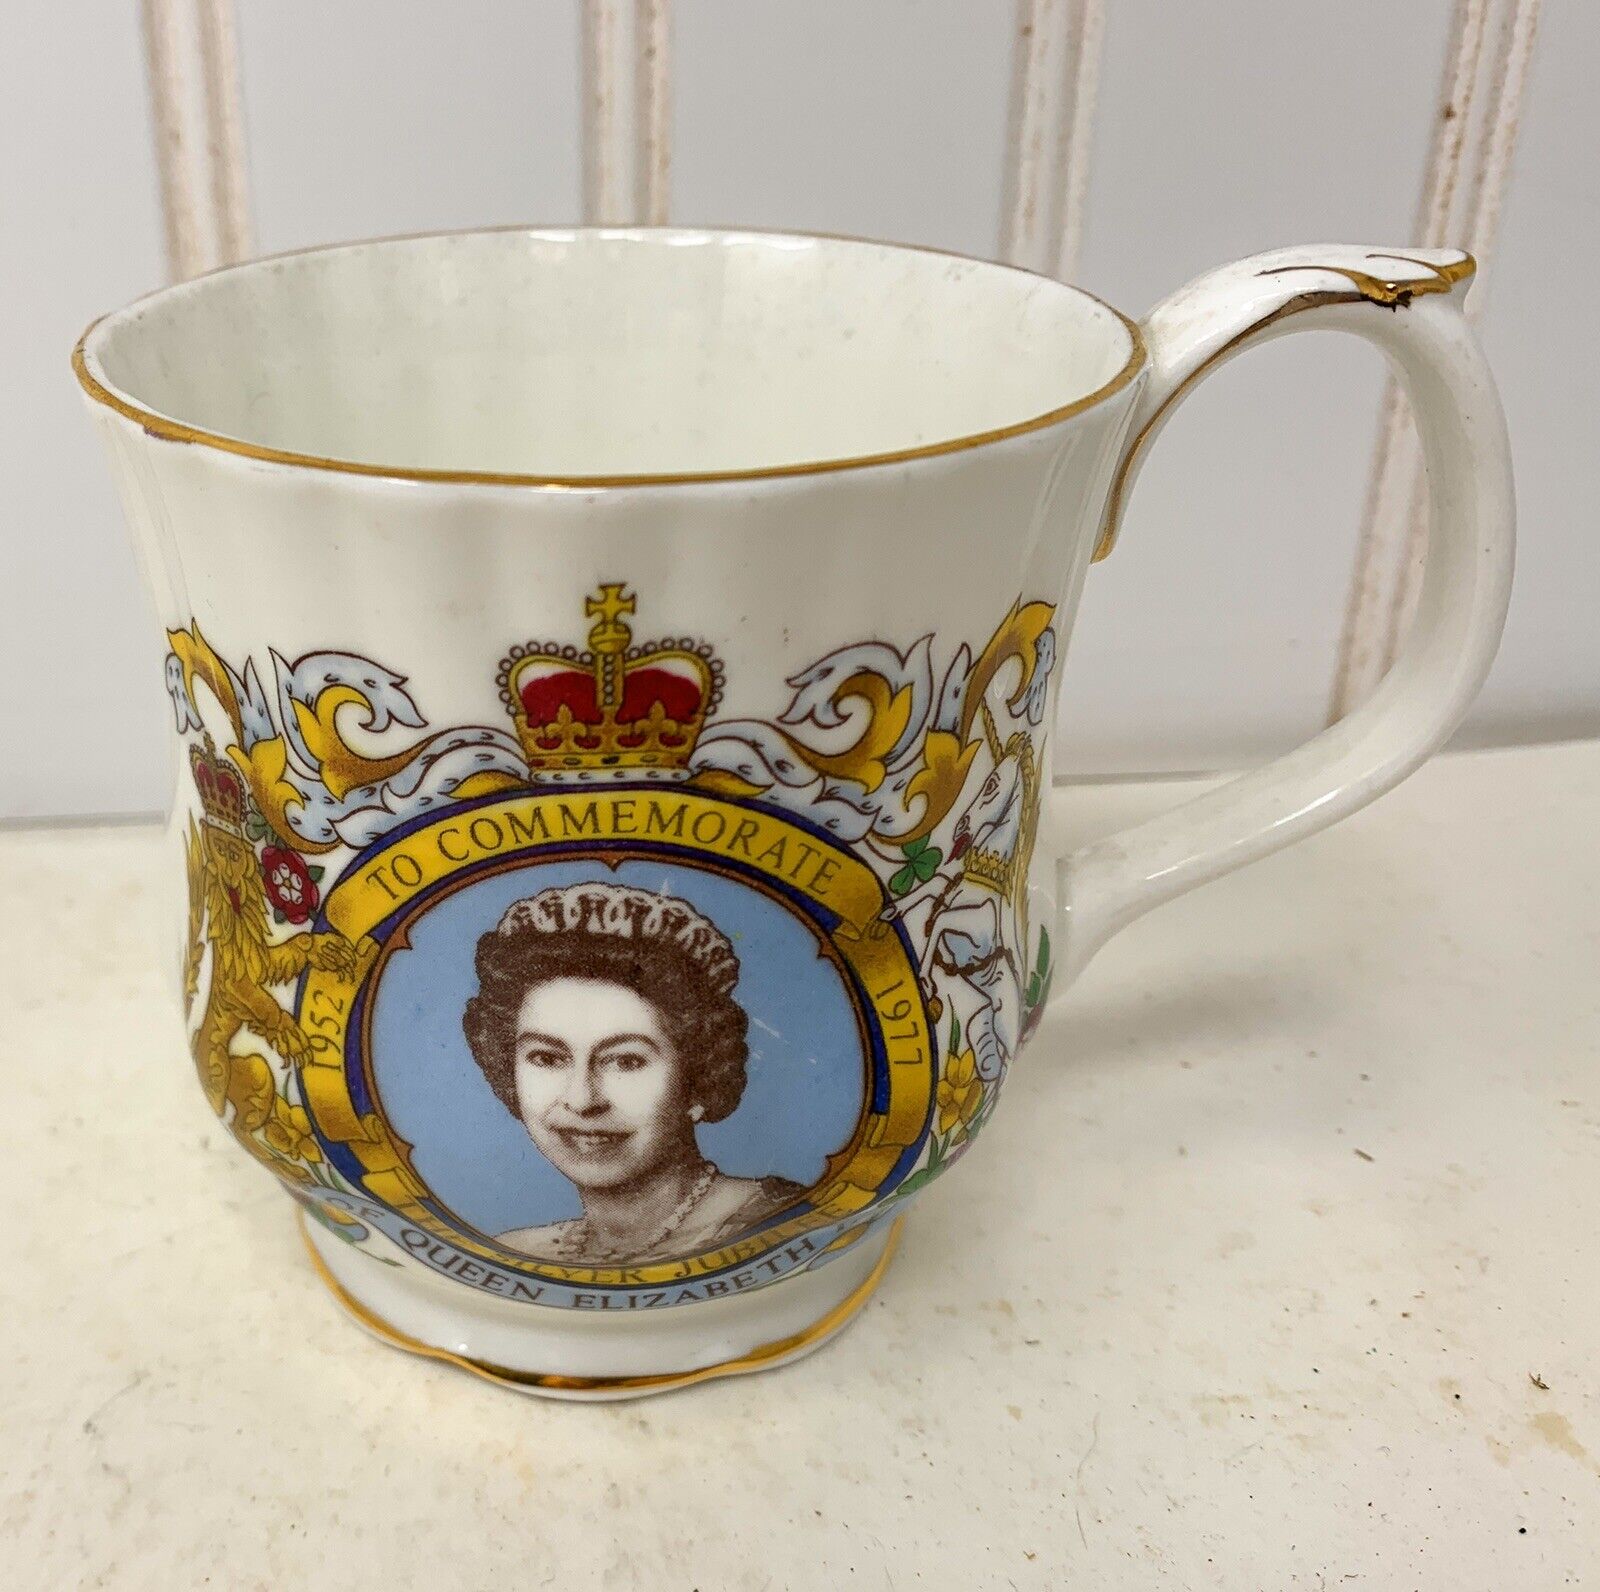 Teacup - Commemorating the Silver Jubilee of HRH Queen Elizabeth II 1977